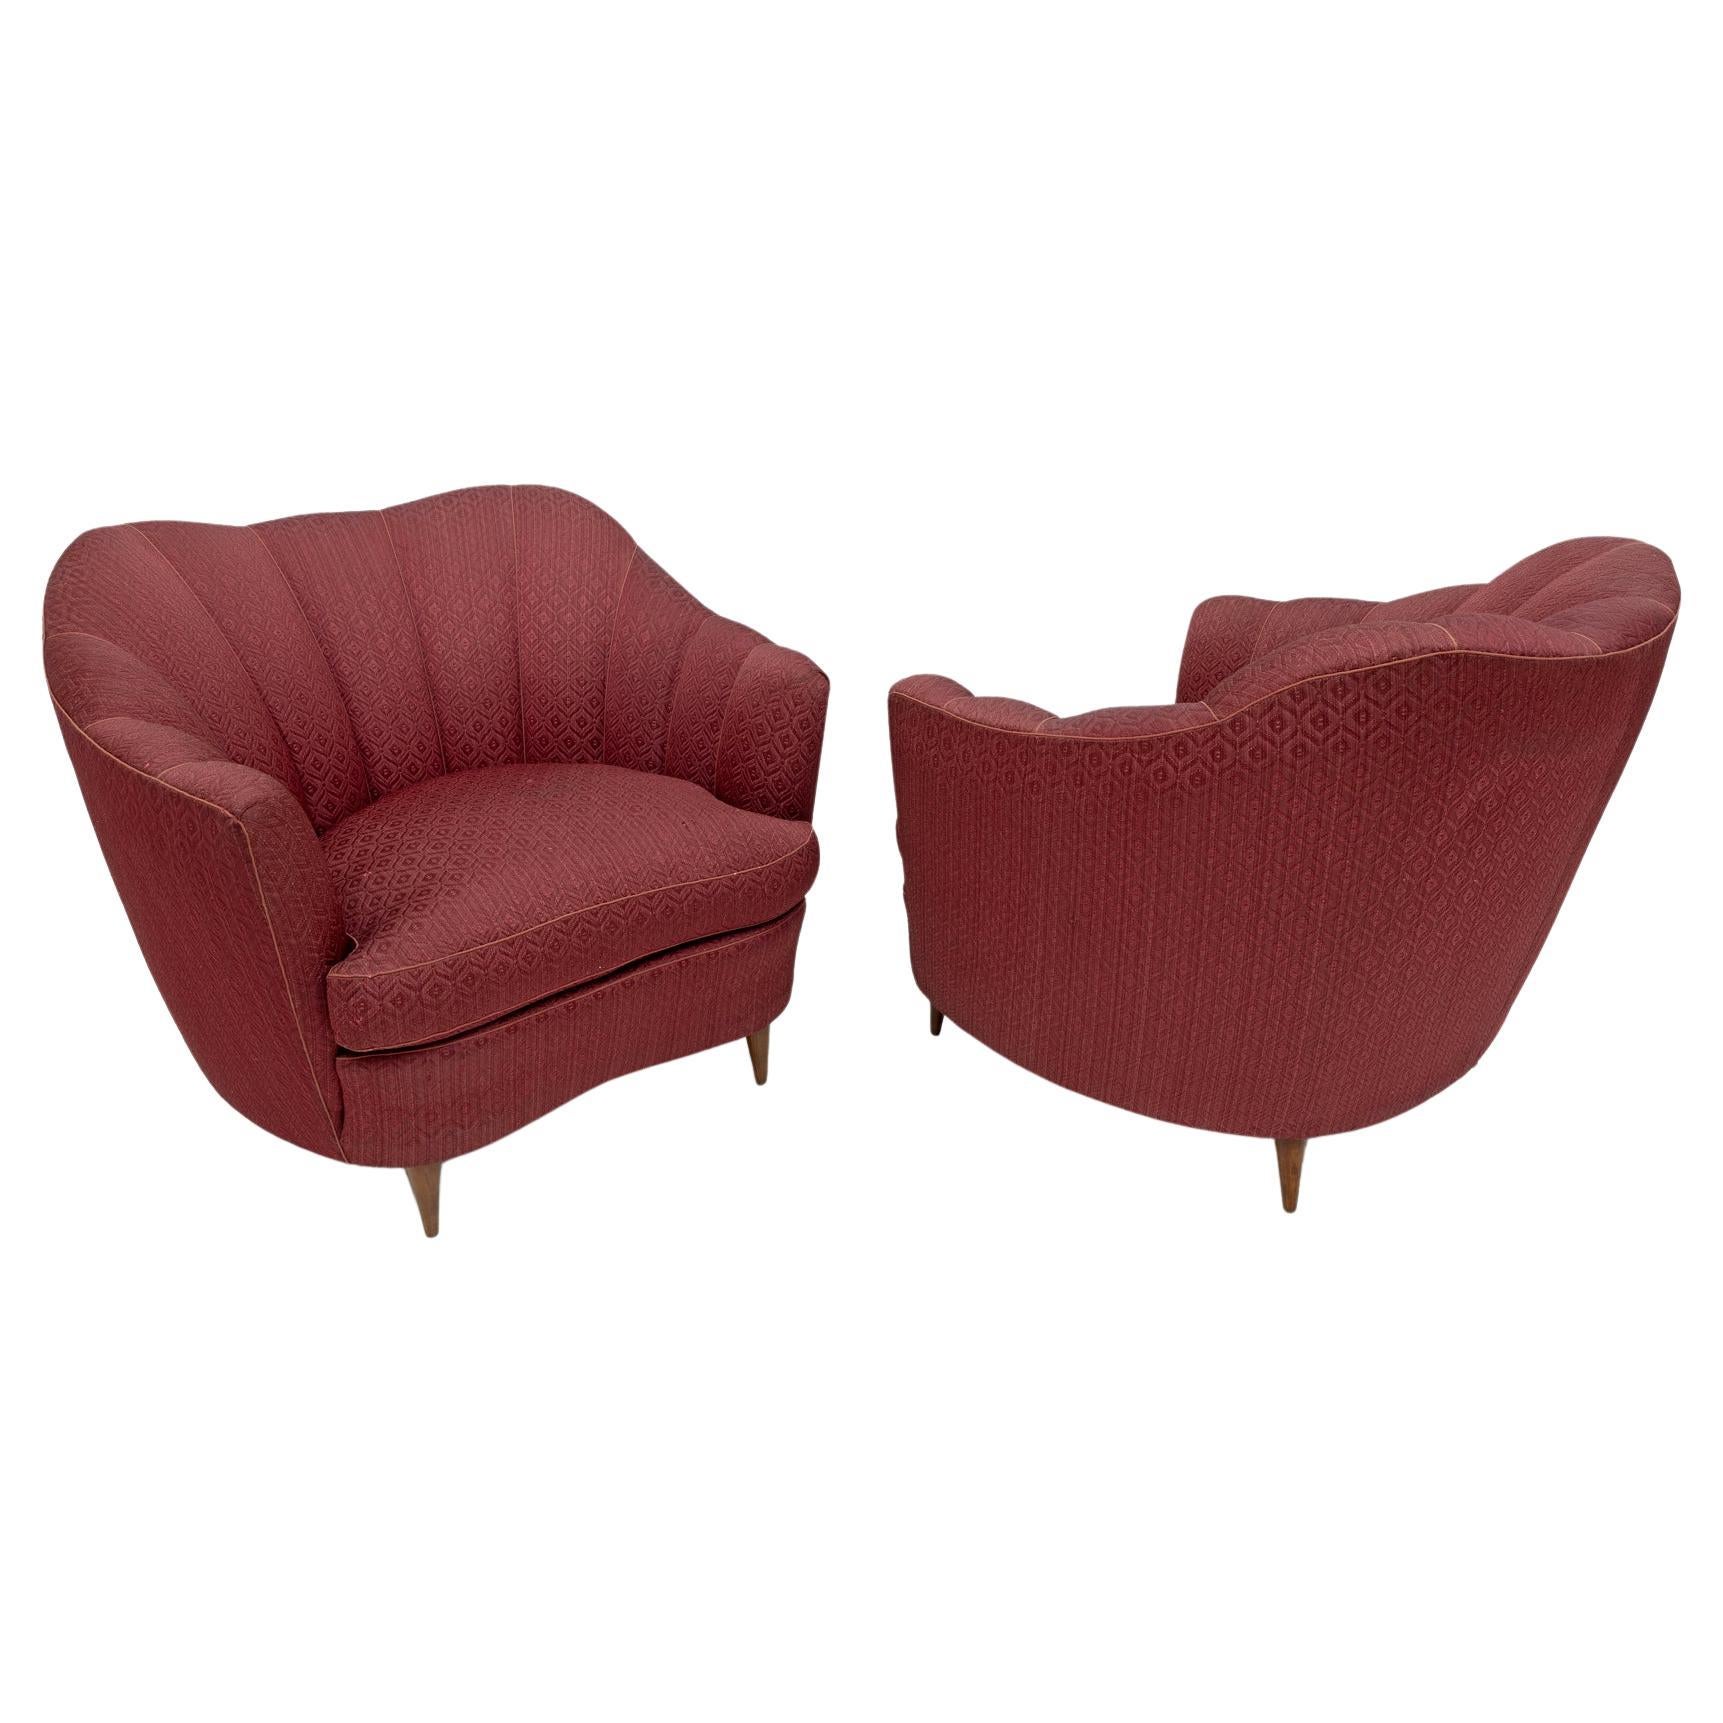 Pair of Gio Ponti Mid-Century Modern Velvet Armchairs for Casa e Giardino, 1950s For Sale